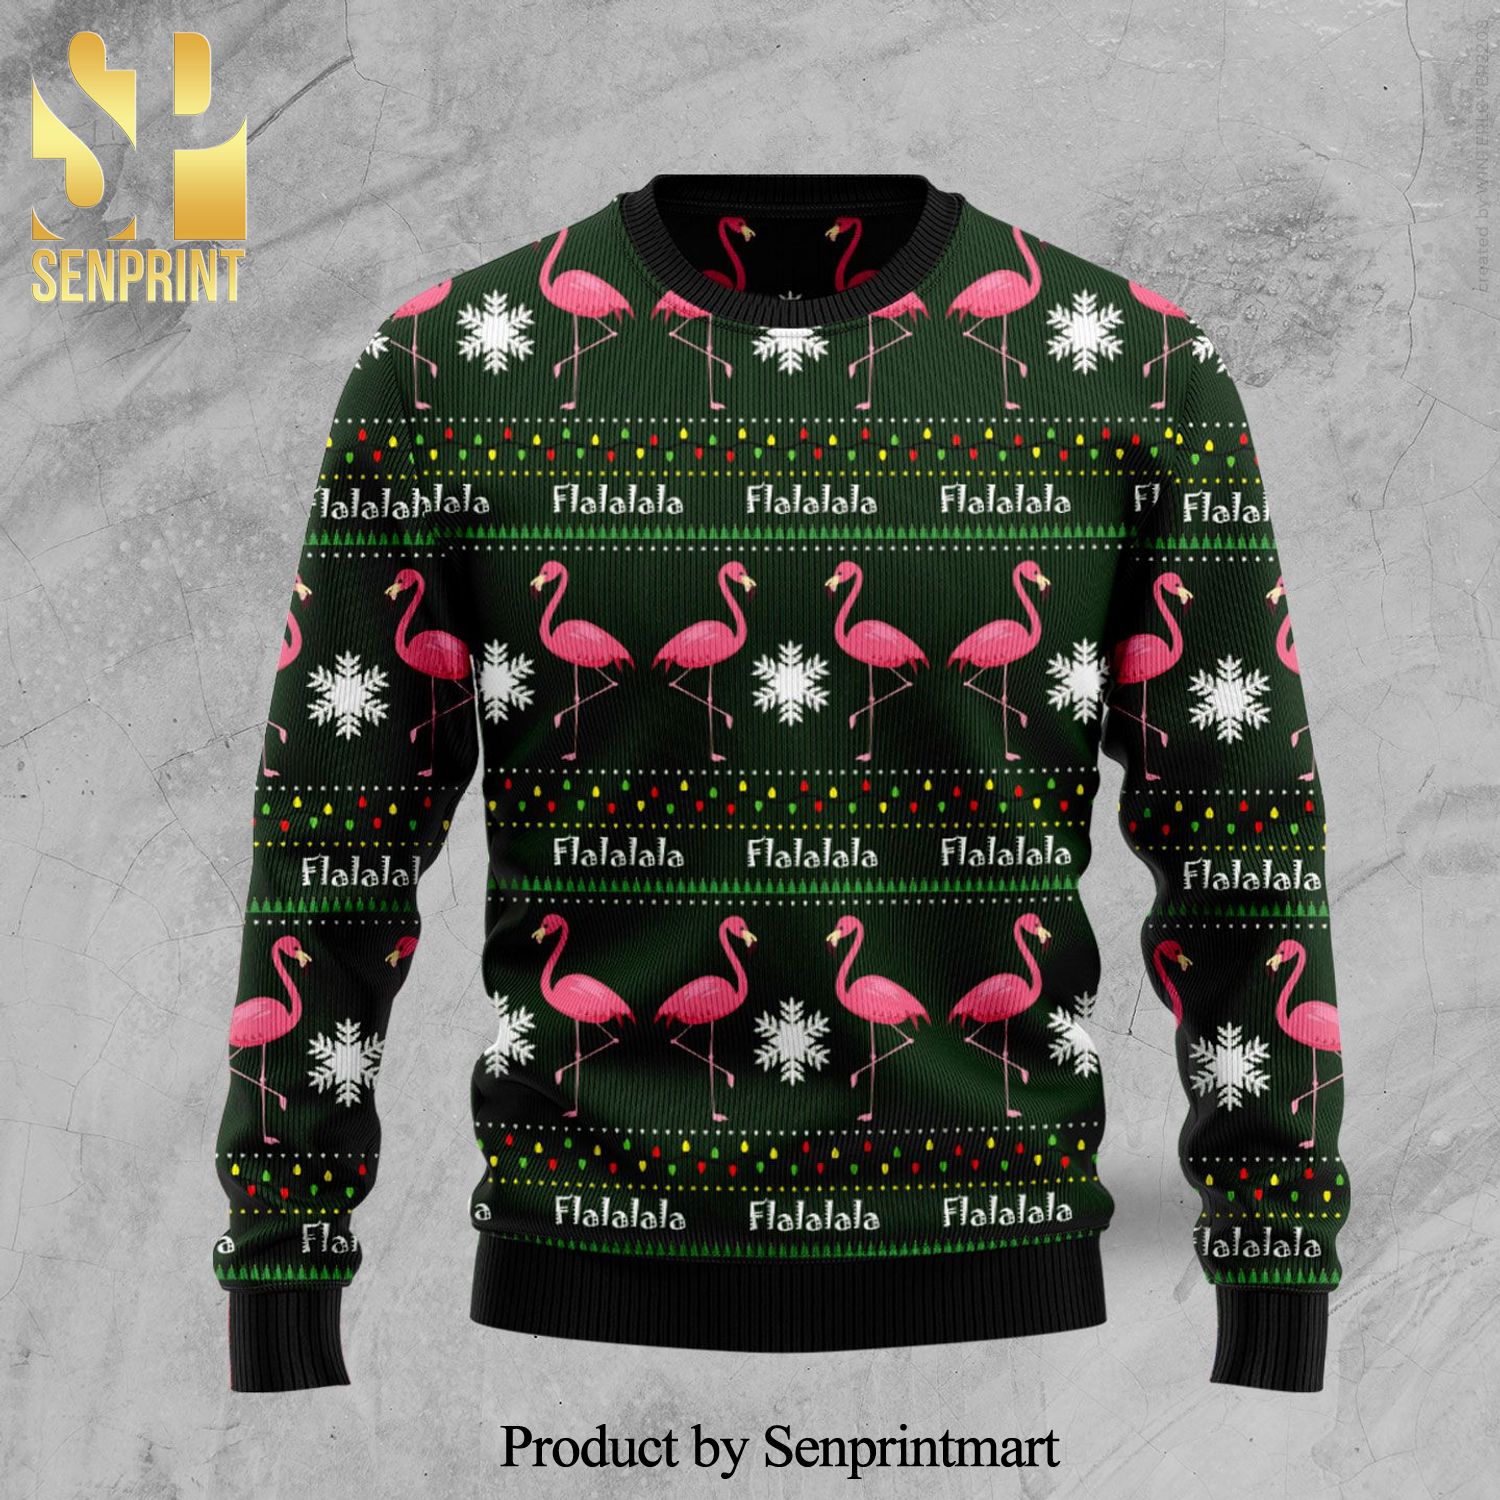 Flamingo Flalala Knitted Ugly Christmas Sweater